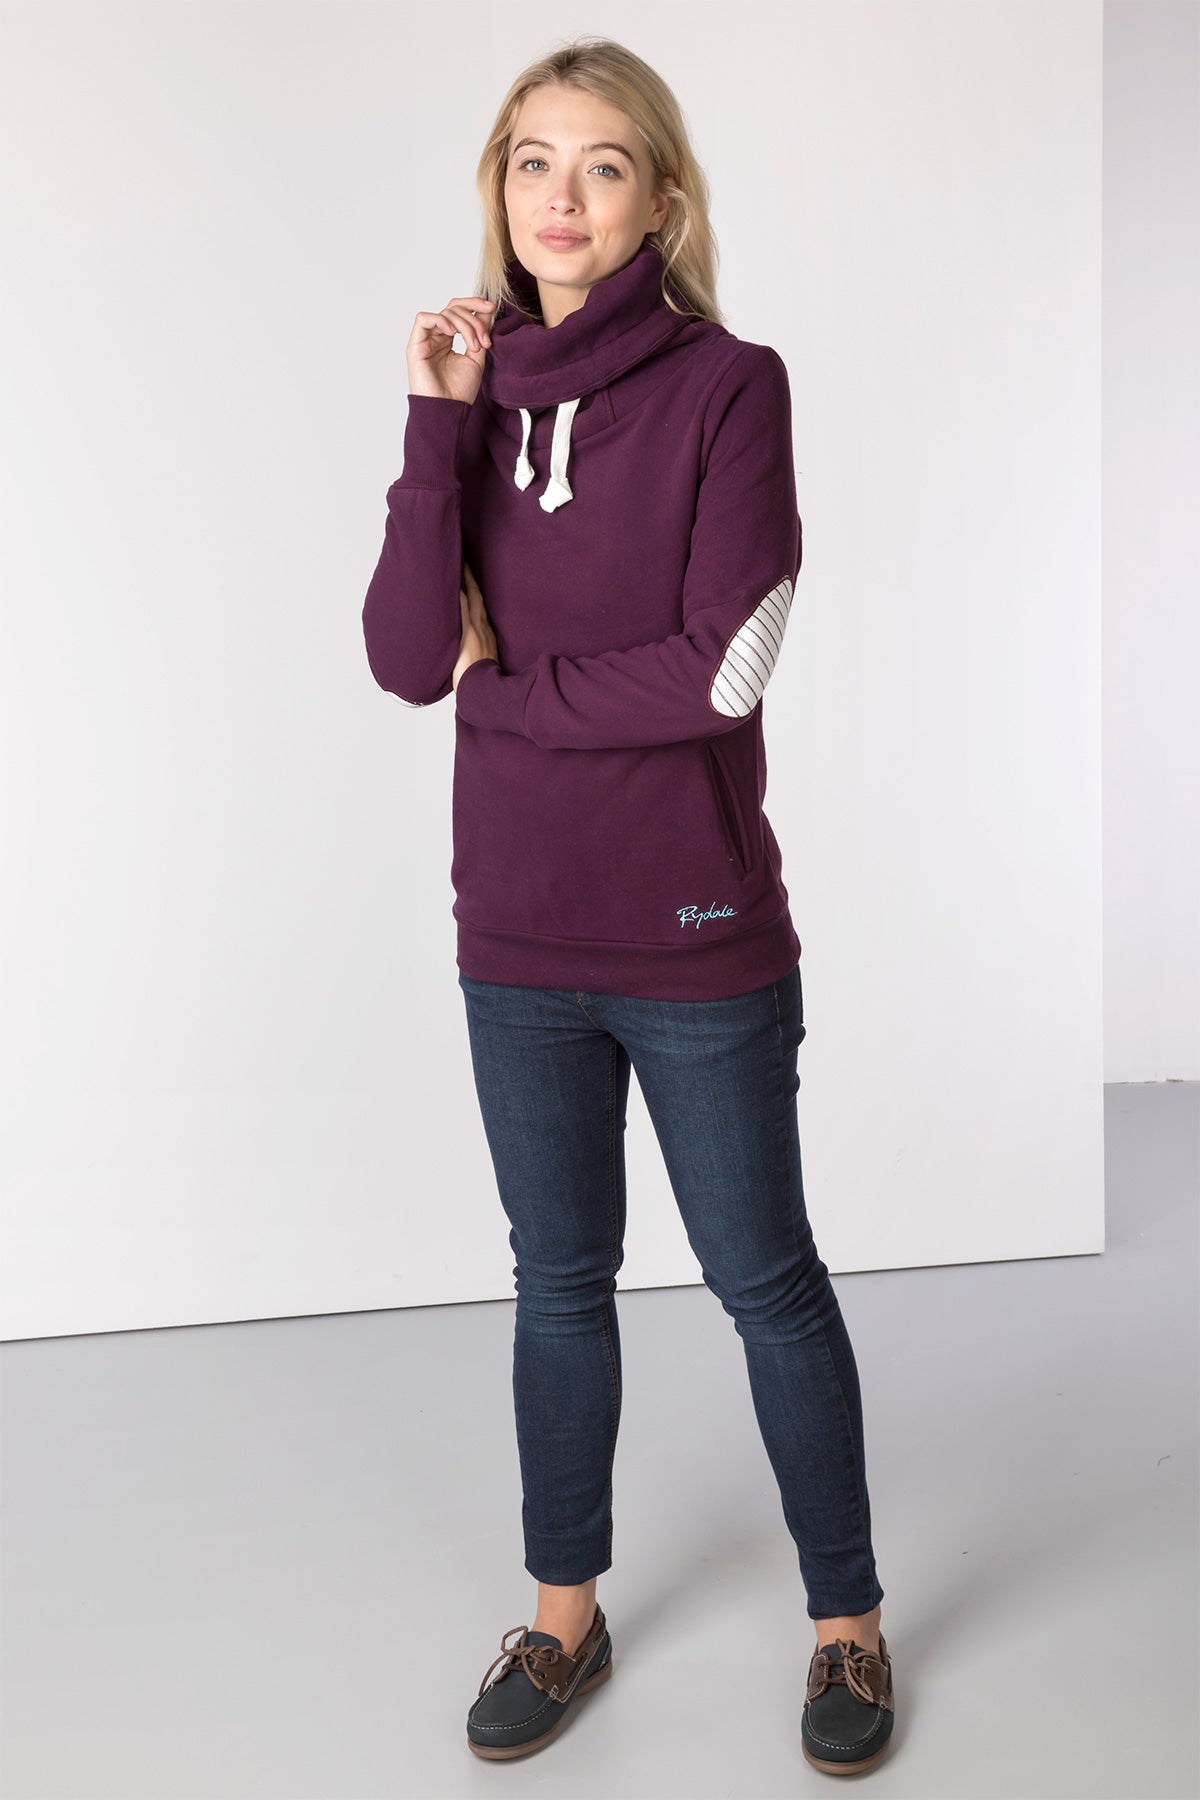 Ladies Cross Neck Sweatshirt UK | Cross Neck Hoodie | Rydale